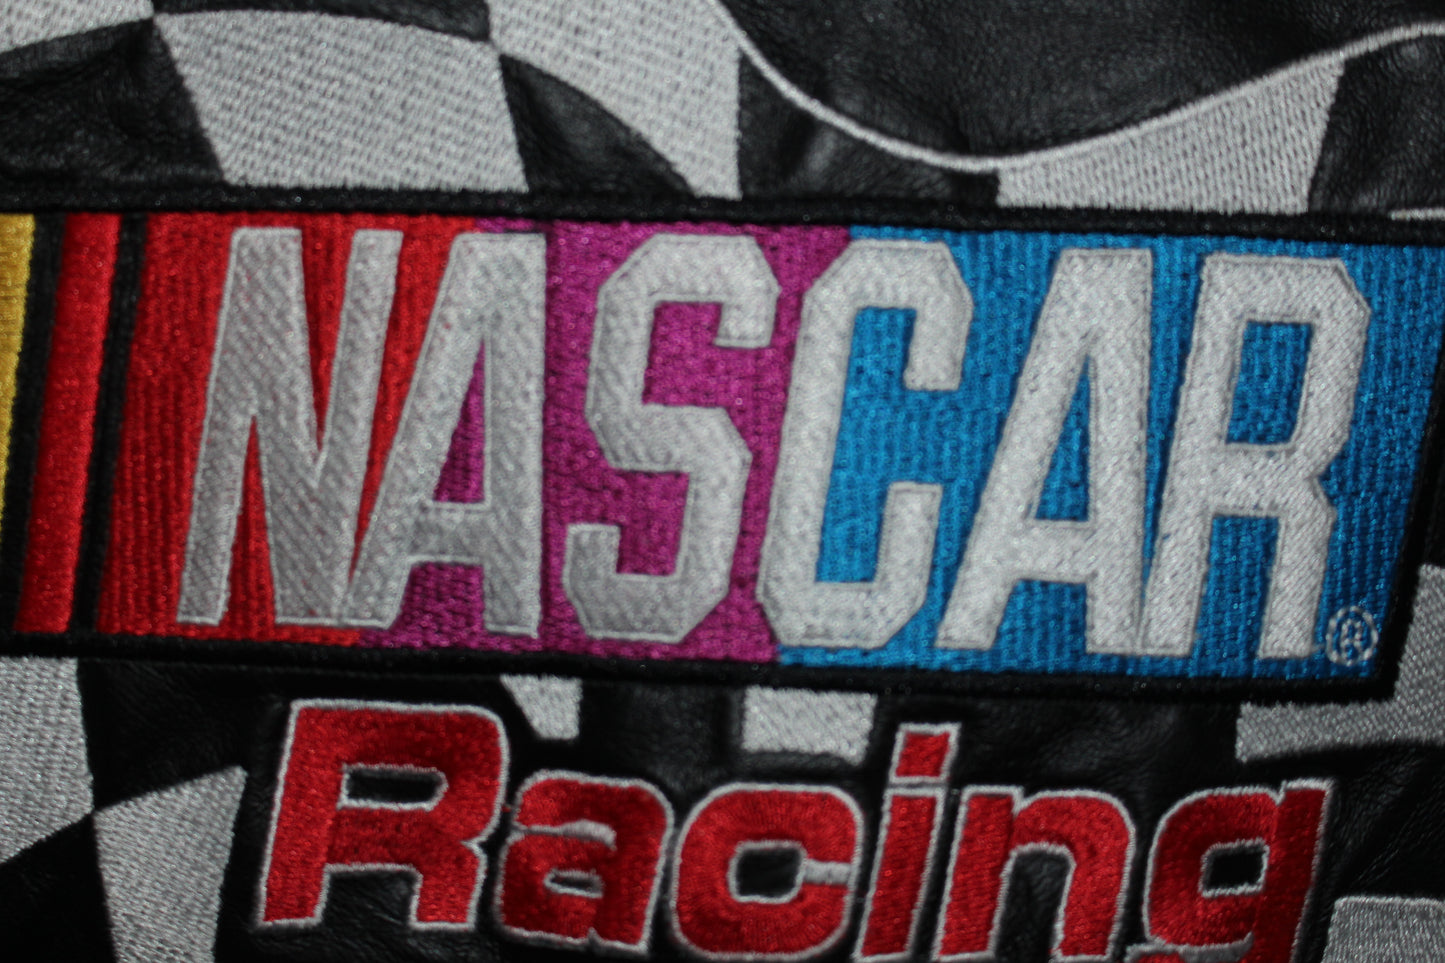 Nextel Cup Series NASCAR Leather Jacket (L)